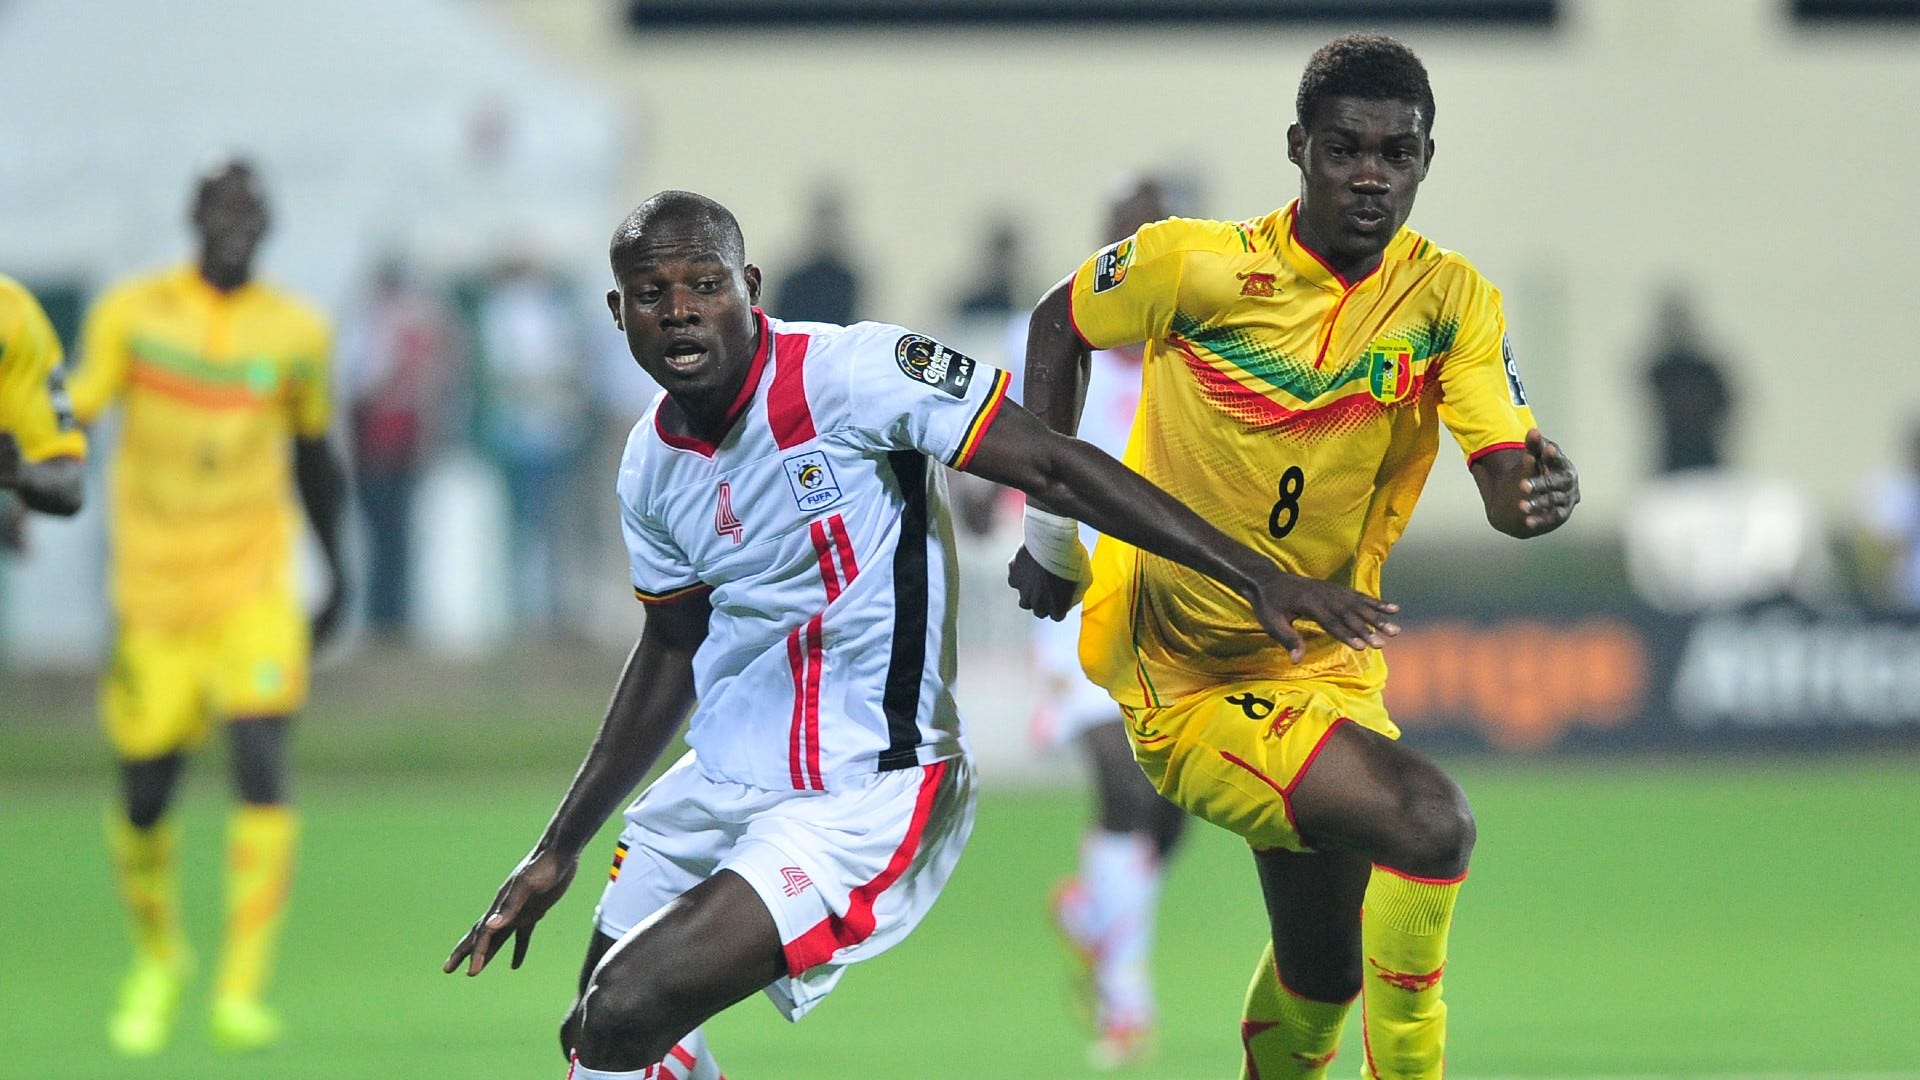 Yves Bissouma of Mali goes past Richard Kasagga of Uganda during the 2016 CHAN football match.